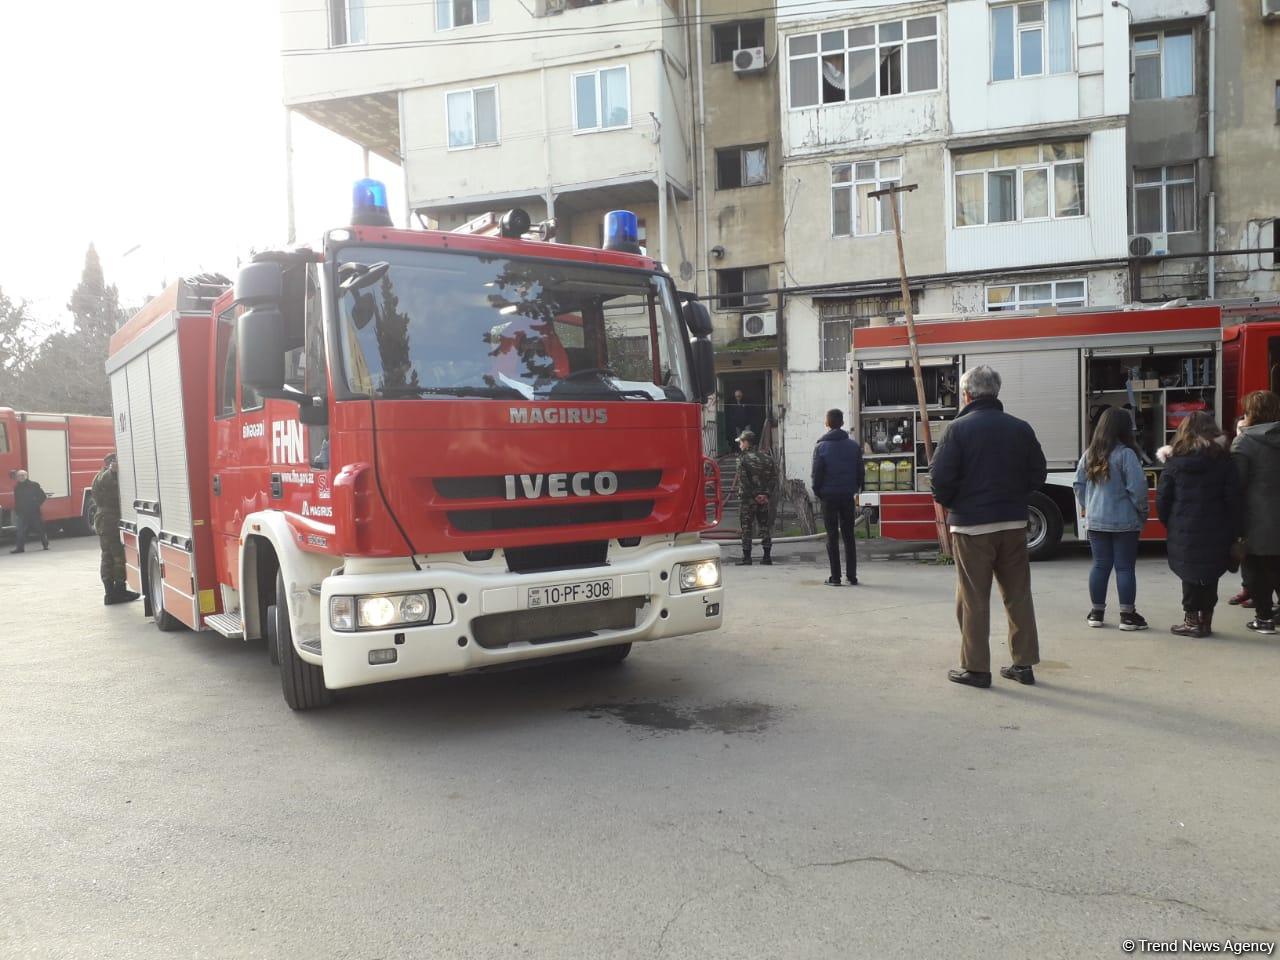 Пожар в жилом здании Баку потушен: причина возгорания - короткое замыкание (ФОТО) (Обновлено)